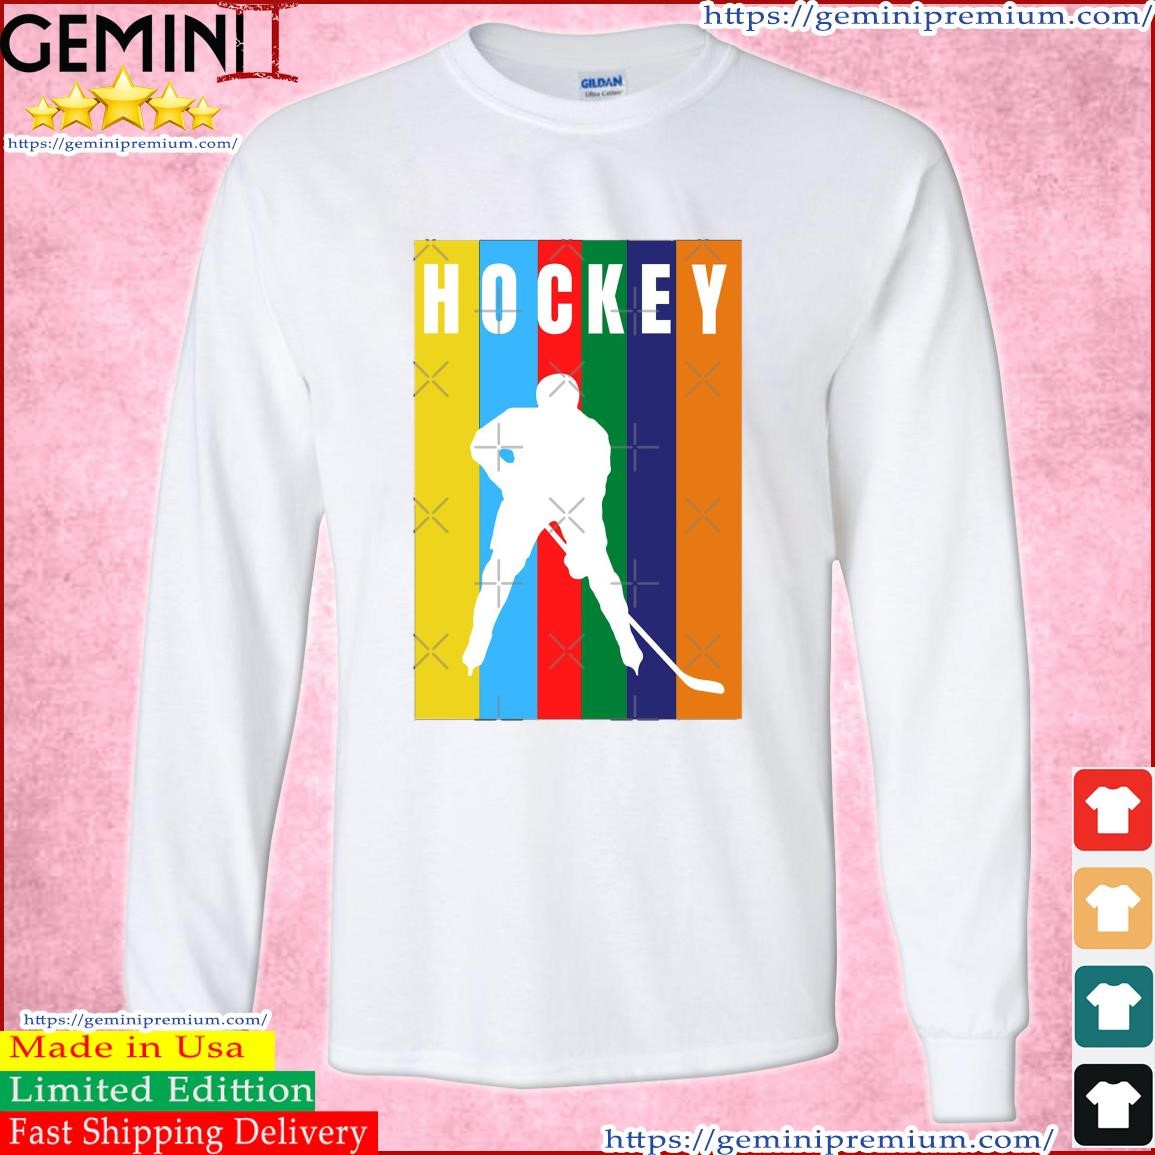 Hockey Super Cool Vintage Shirt Long Sleeve Tee.jpg